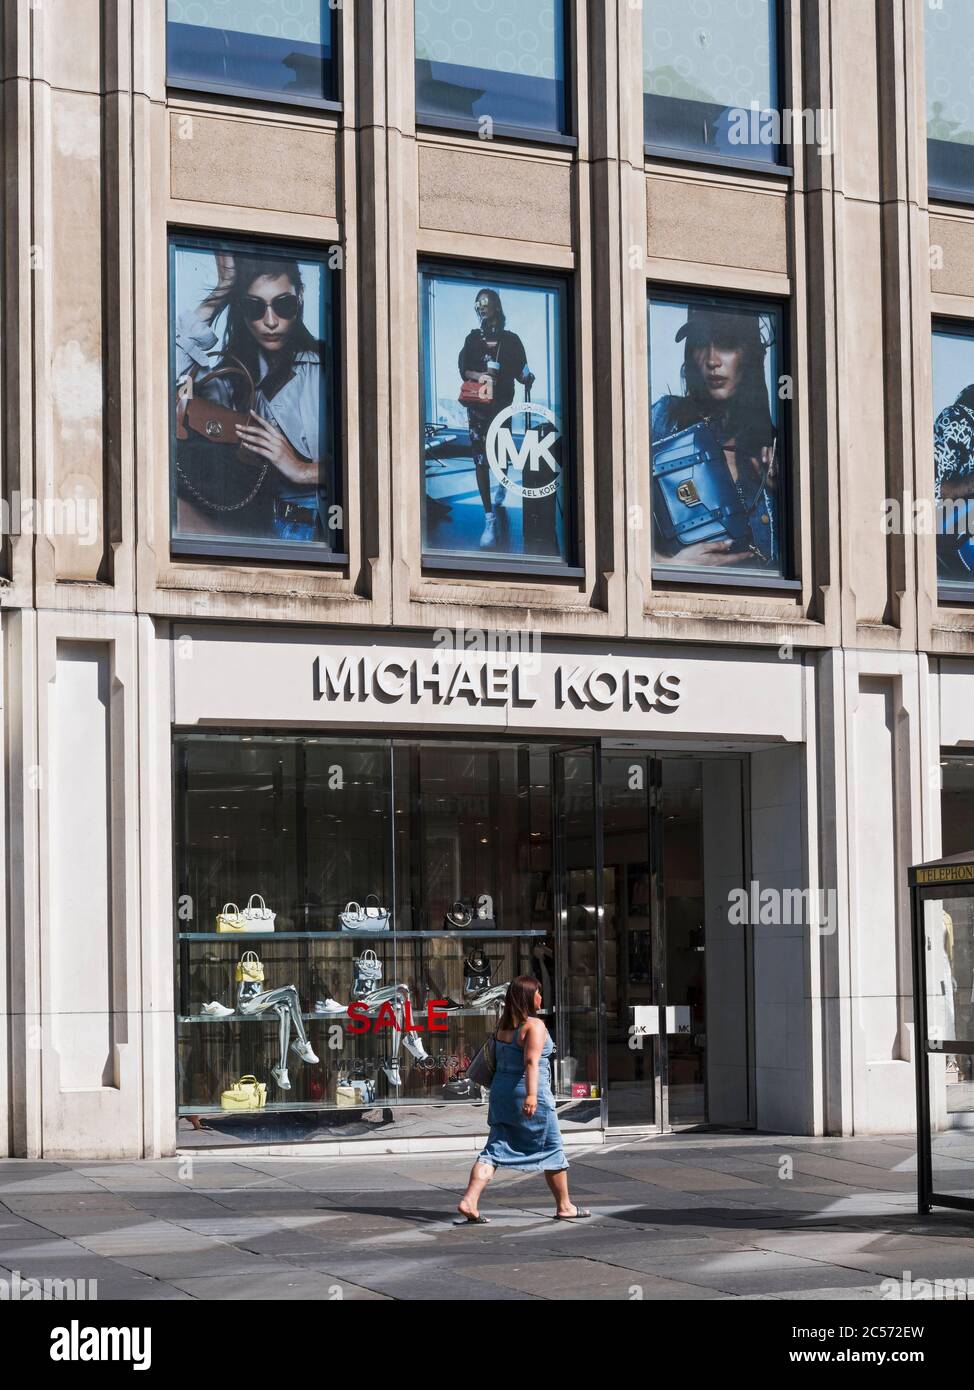 Michael kors fashion store shop fotografías e imágenes de alta resolución -  Alamy